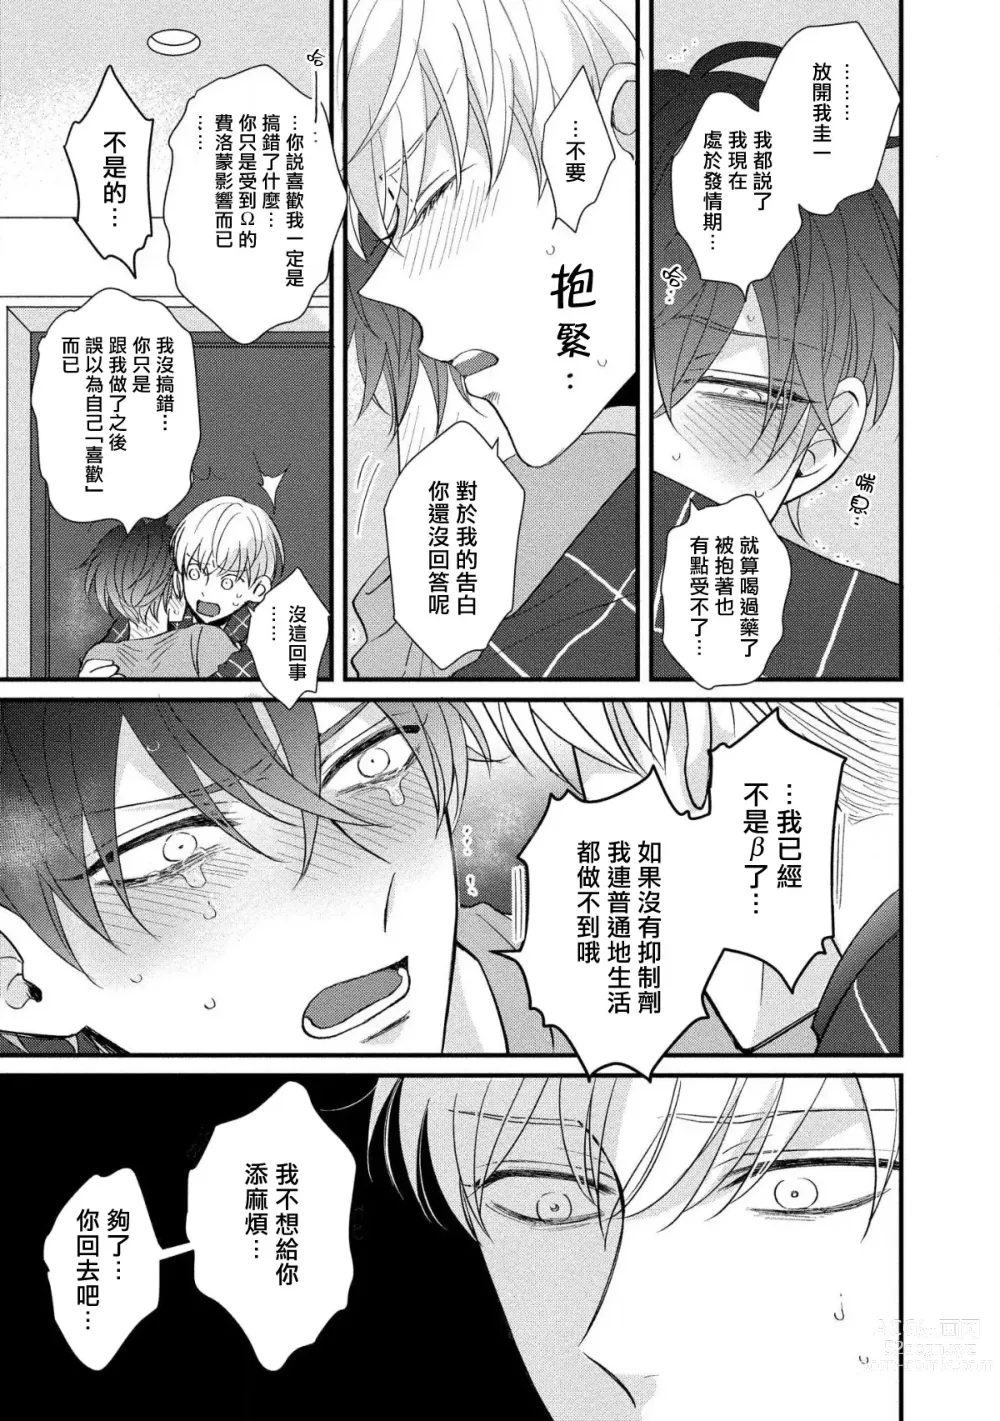 Page 131 of manga 明明我们只是普通的β!! Ch. 1-4